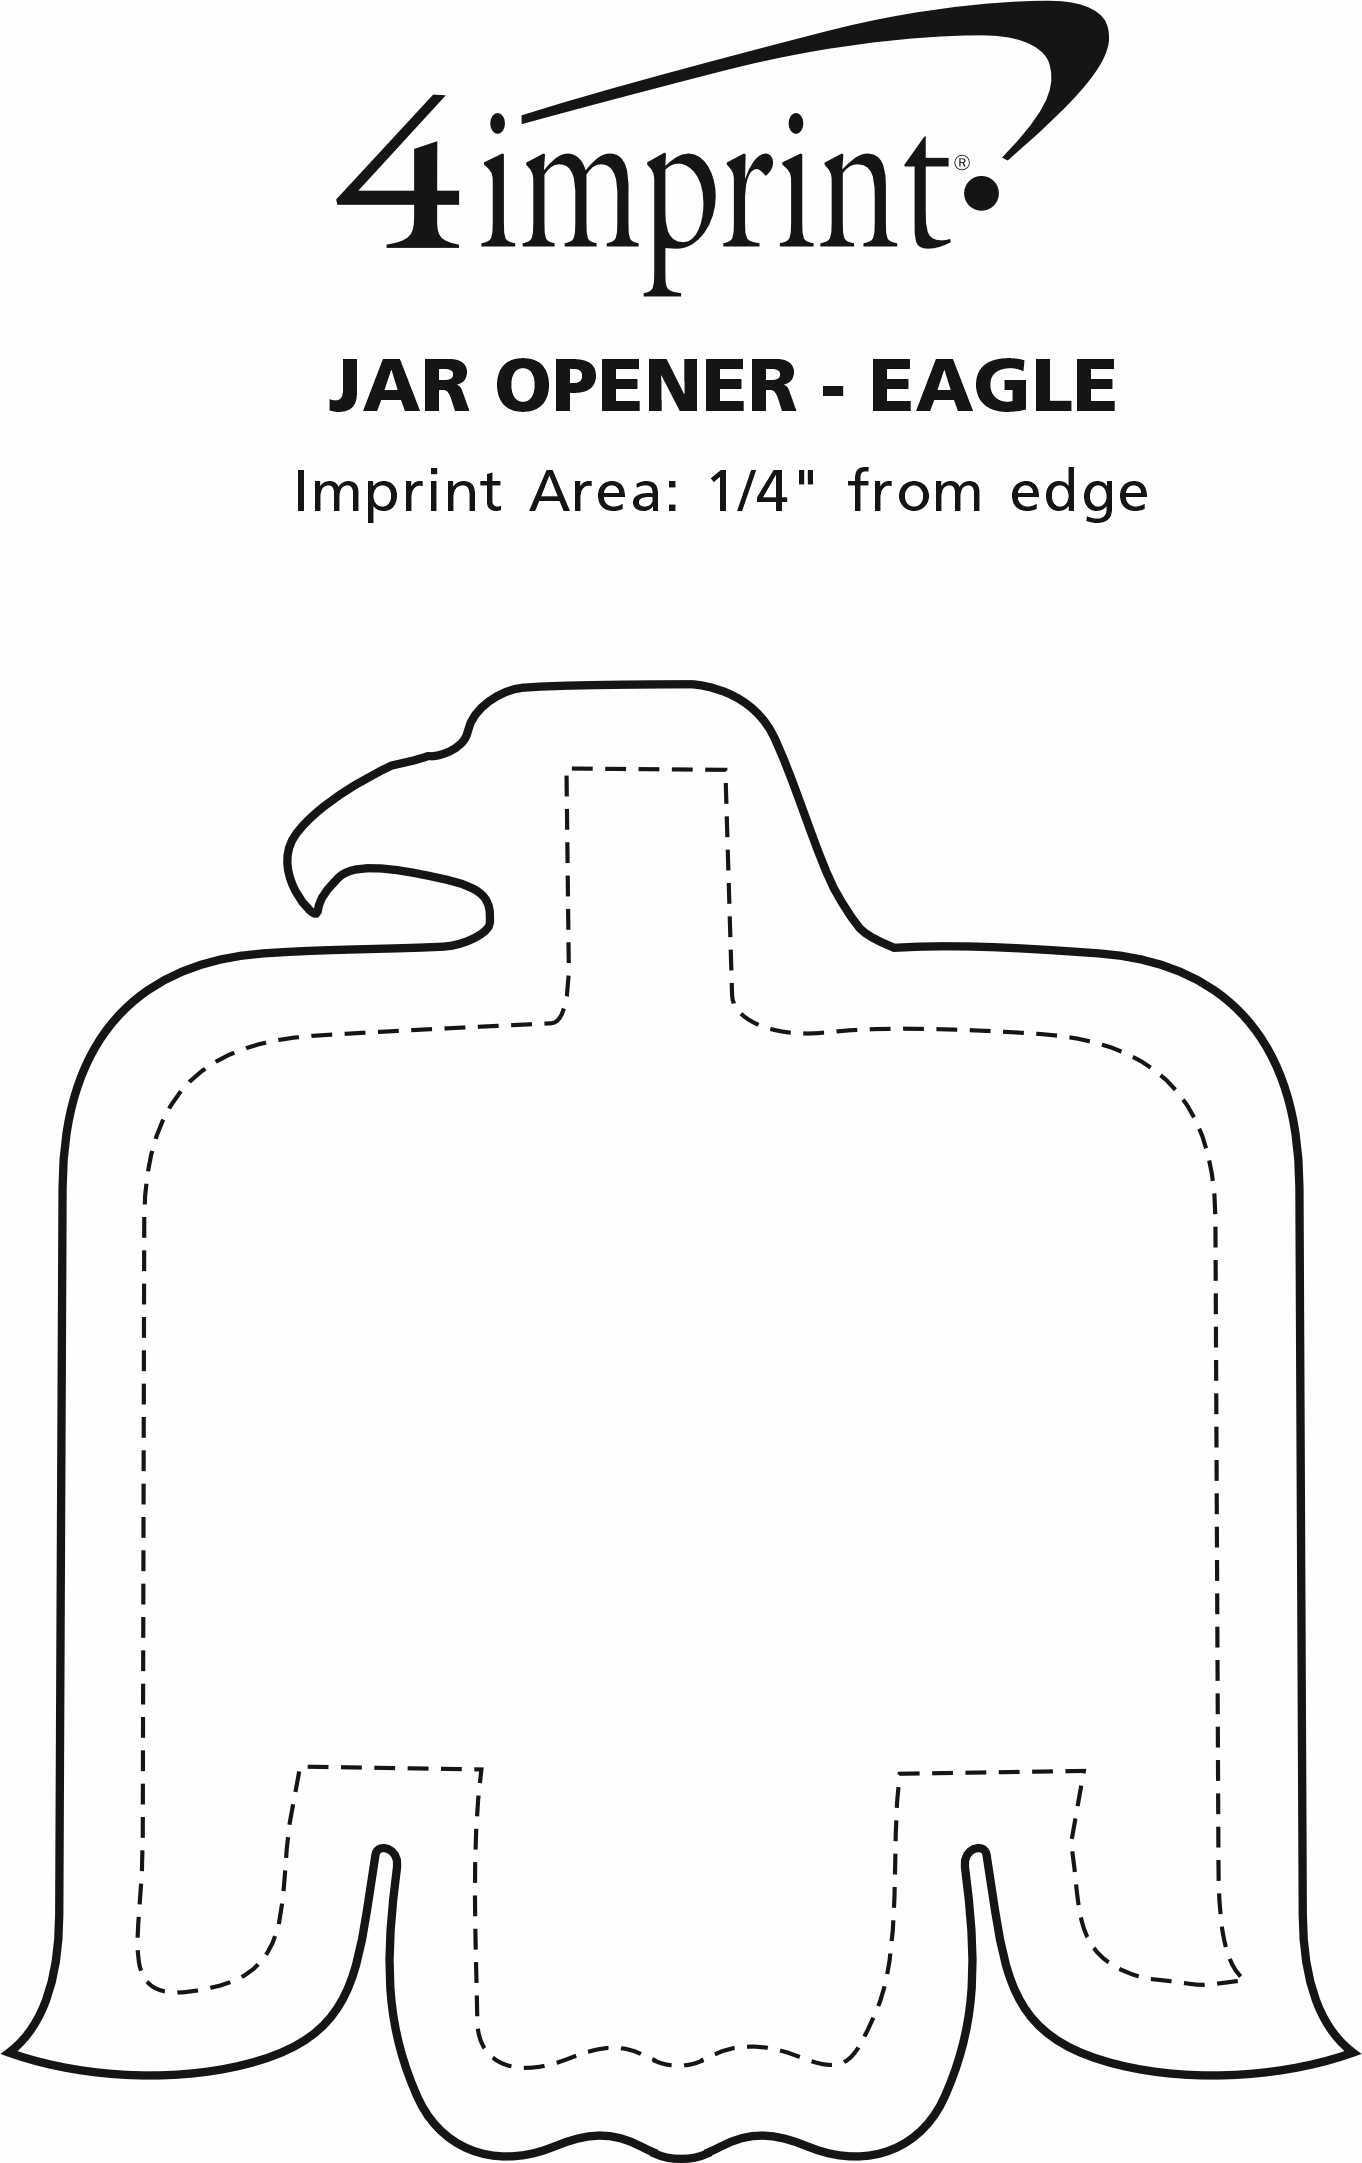 Imprint Area of Jar Opener - Eagle